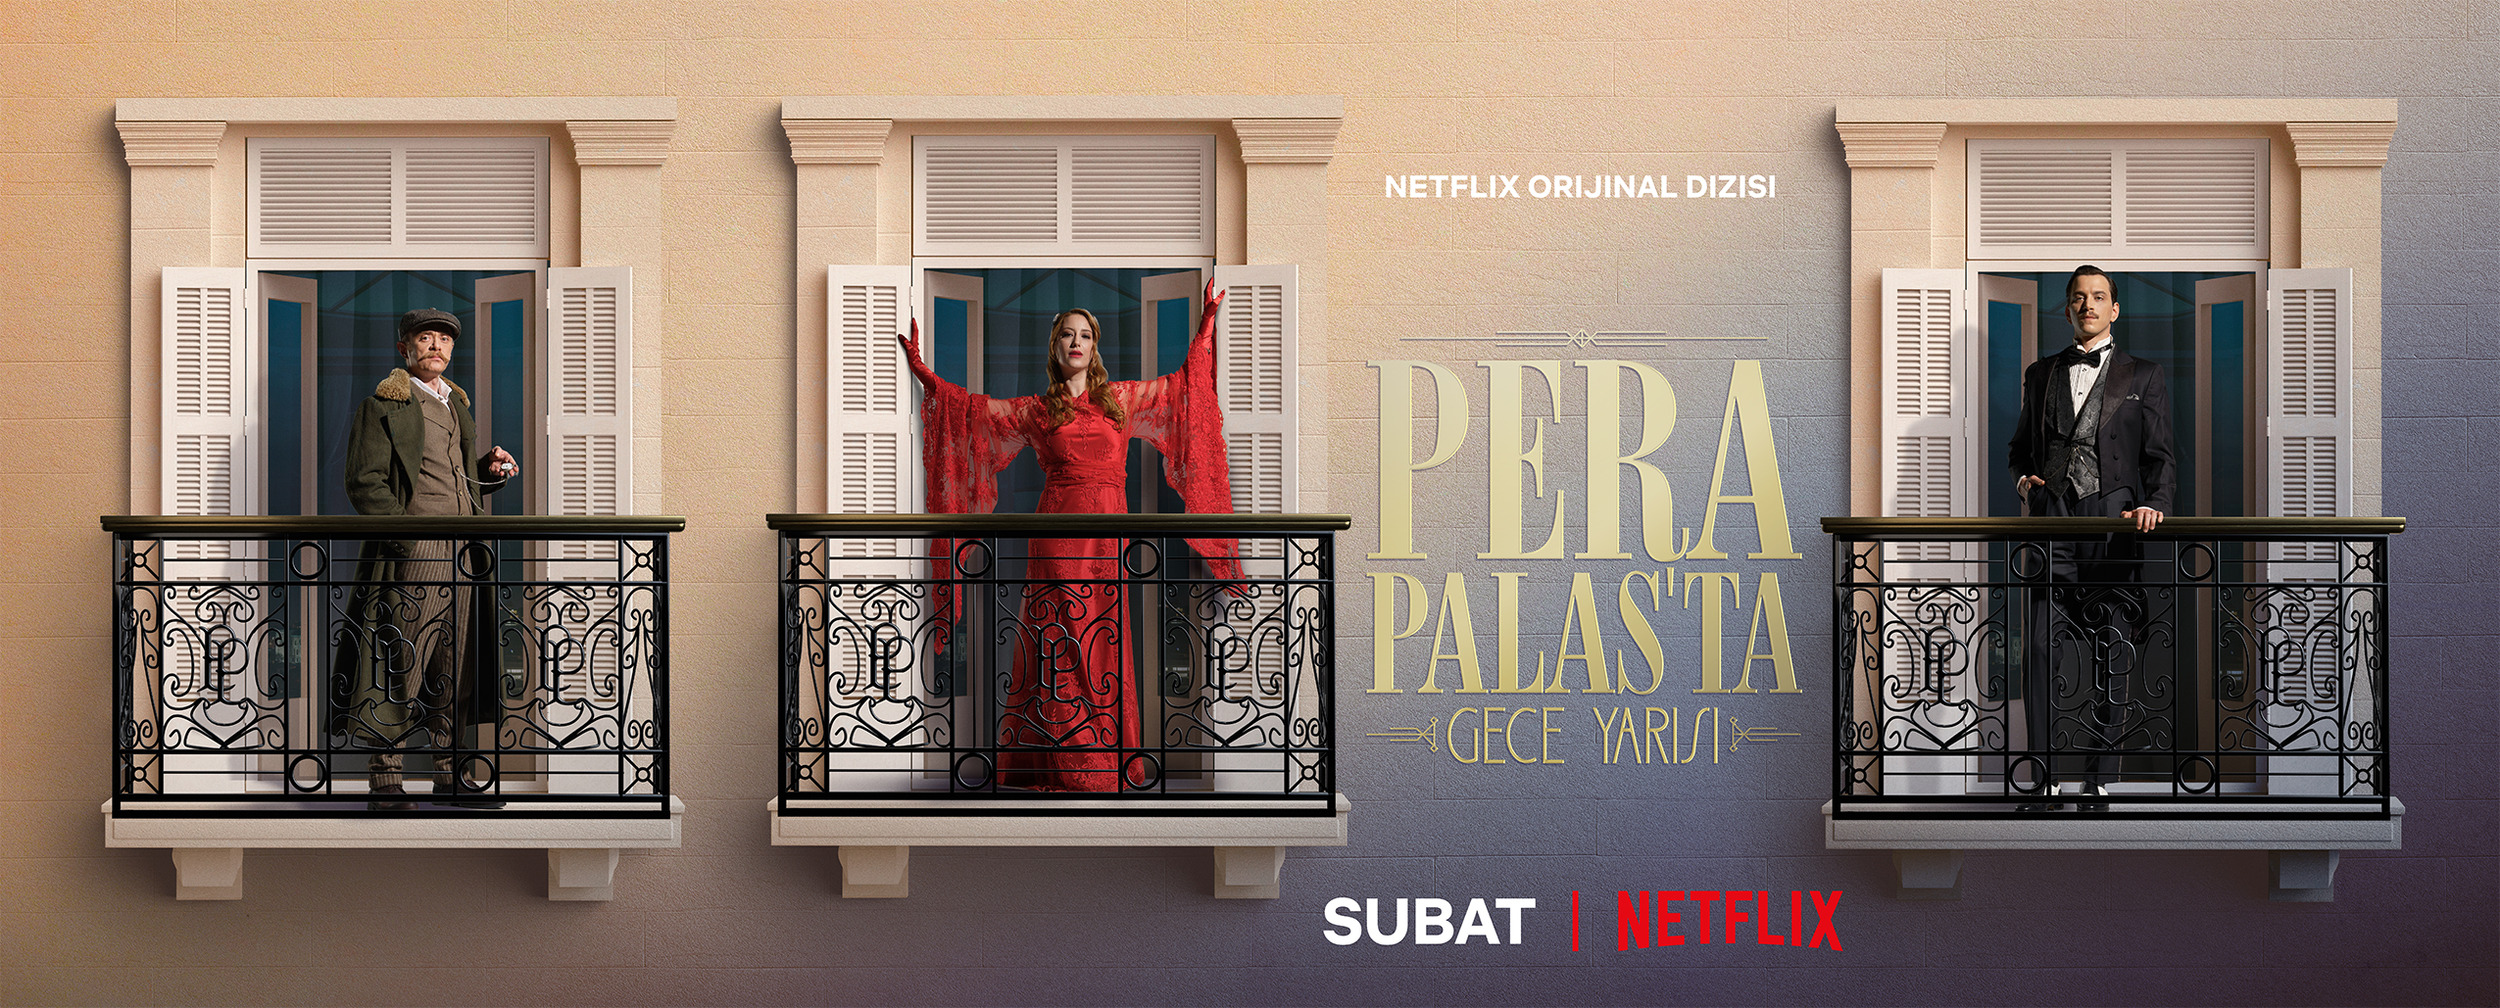 Mega Sized TV Poster Image for Pera Palas'ta Gece Yarisi (#3 of 10)